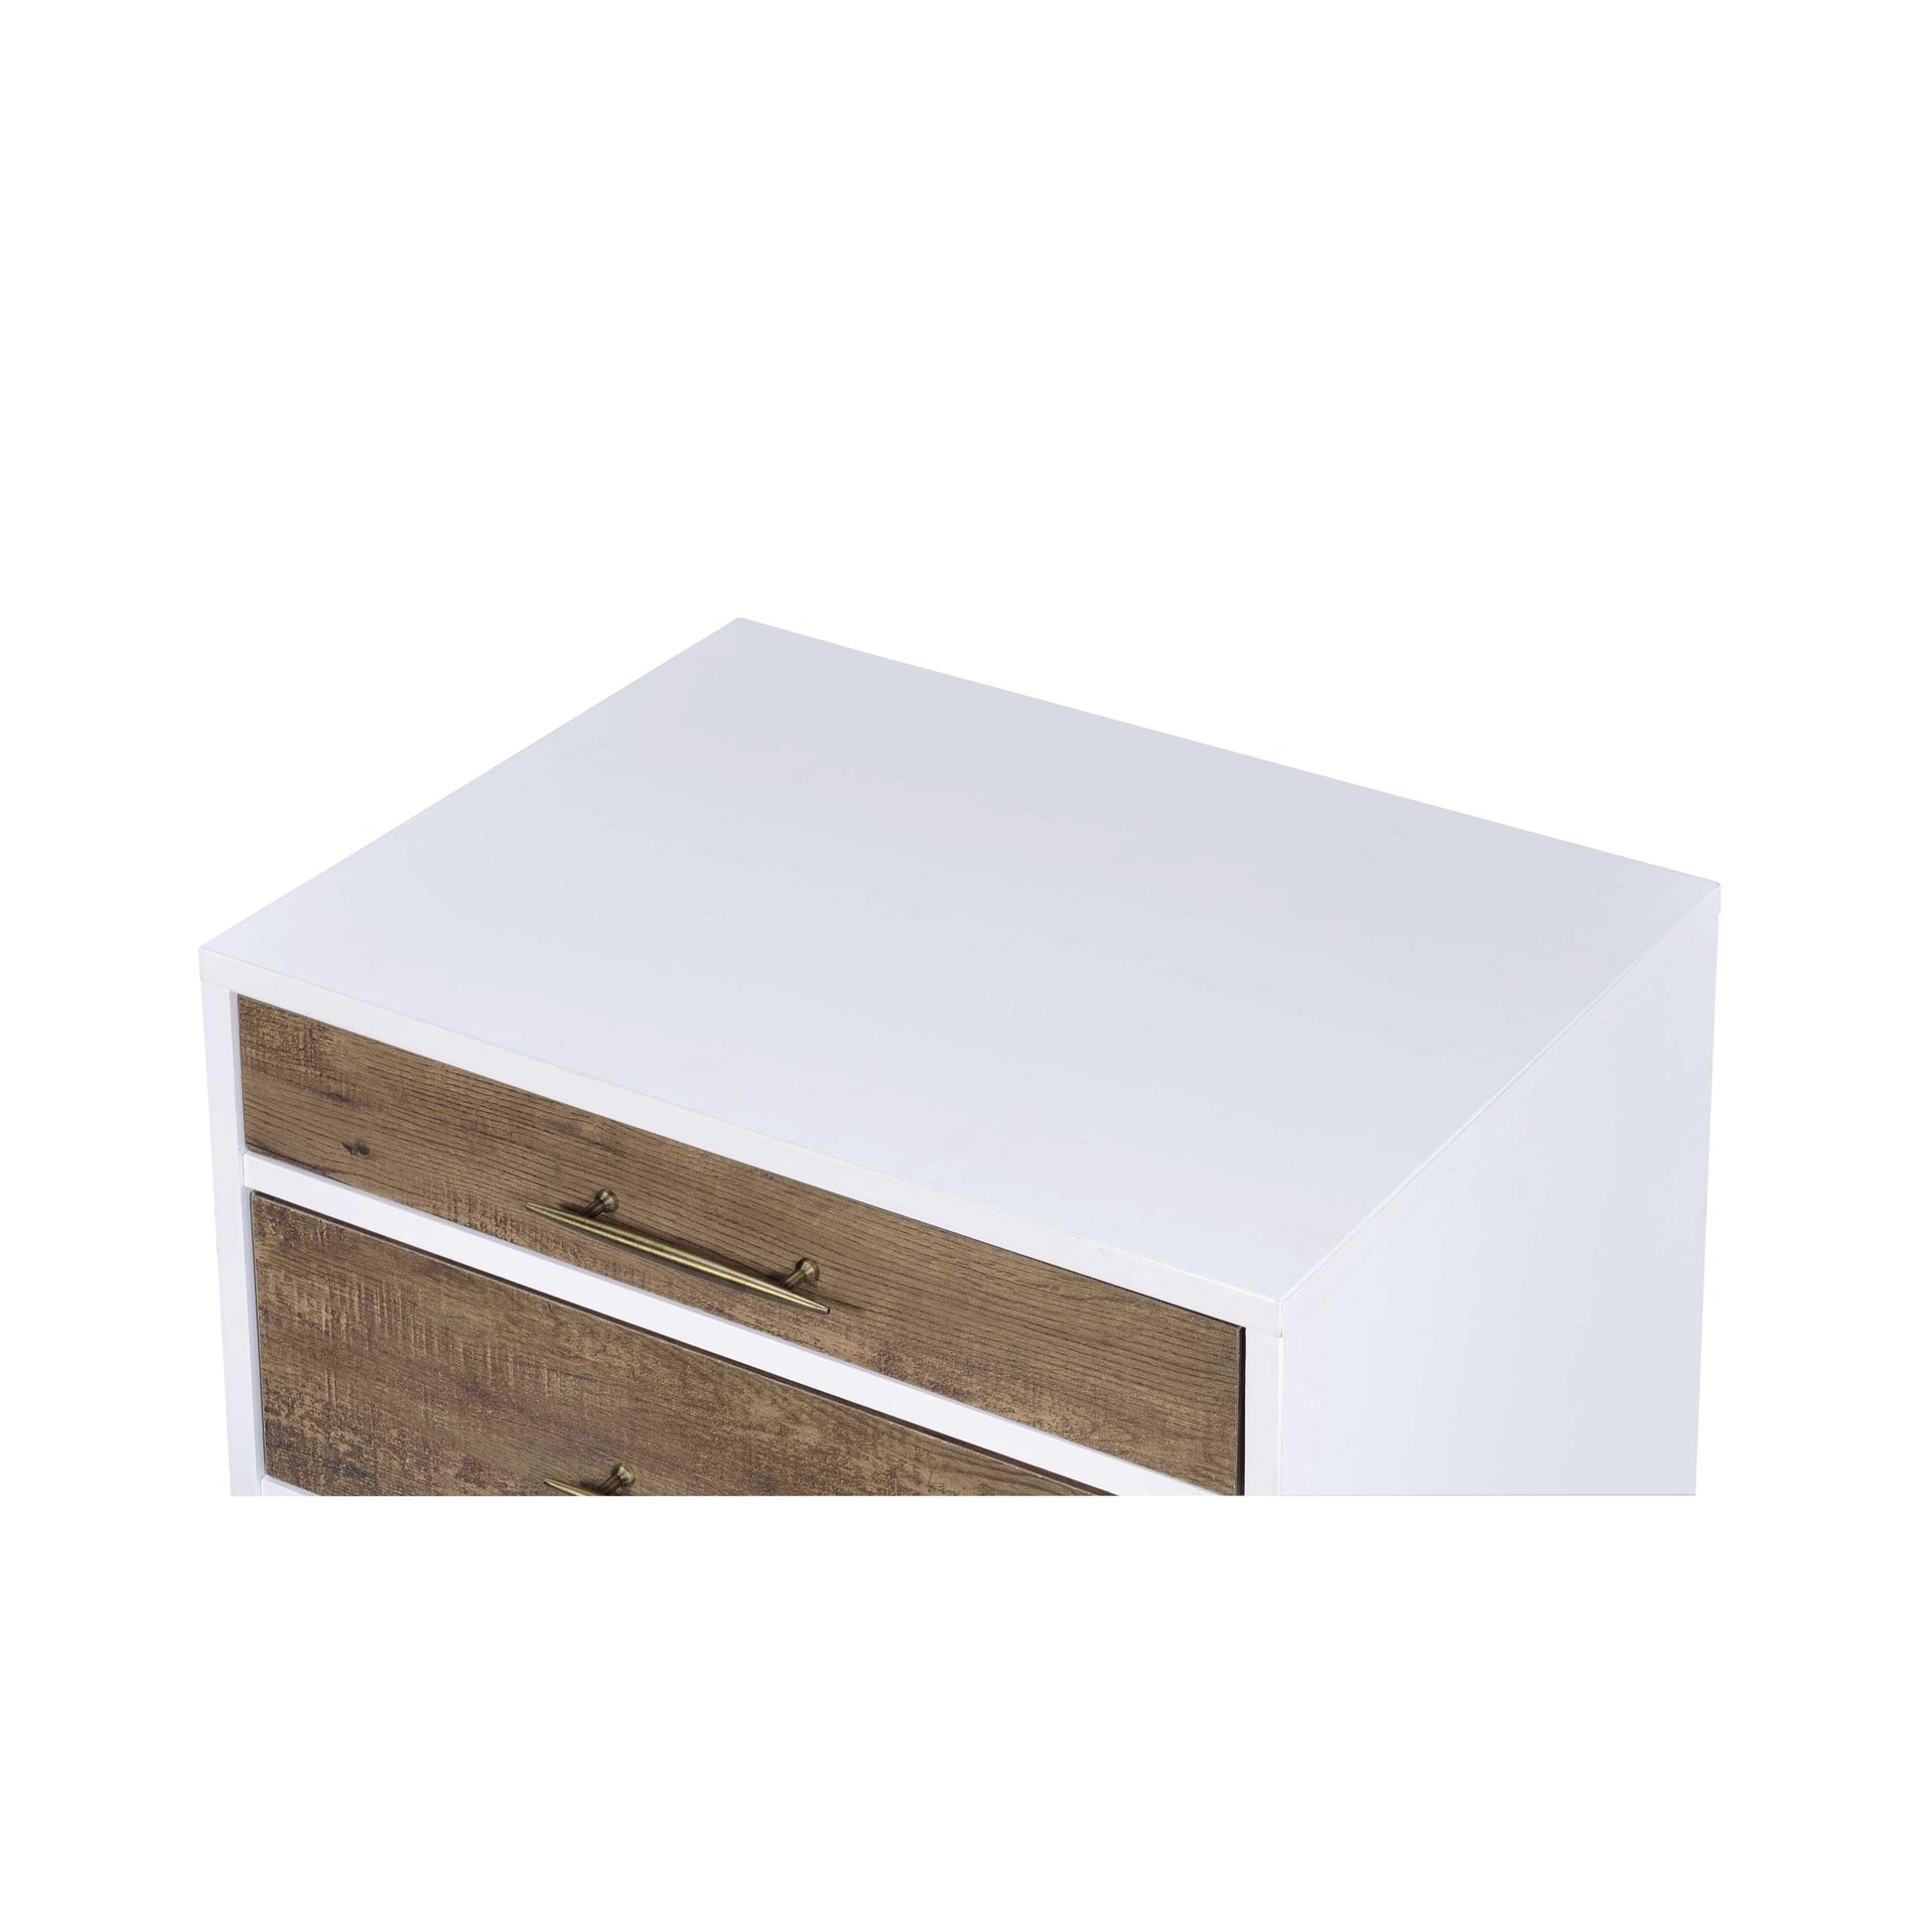 Lurel Night Table in White & Weathered Oak 97551 - Demine Essentials